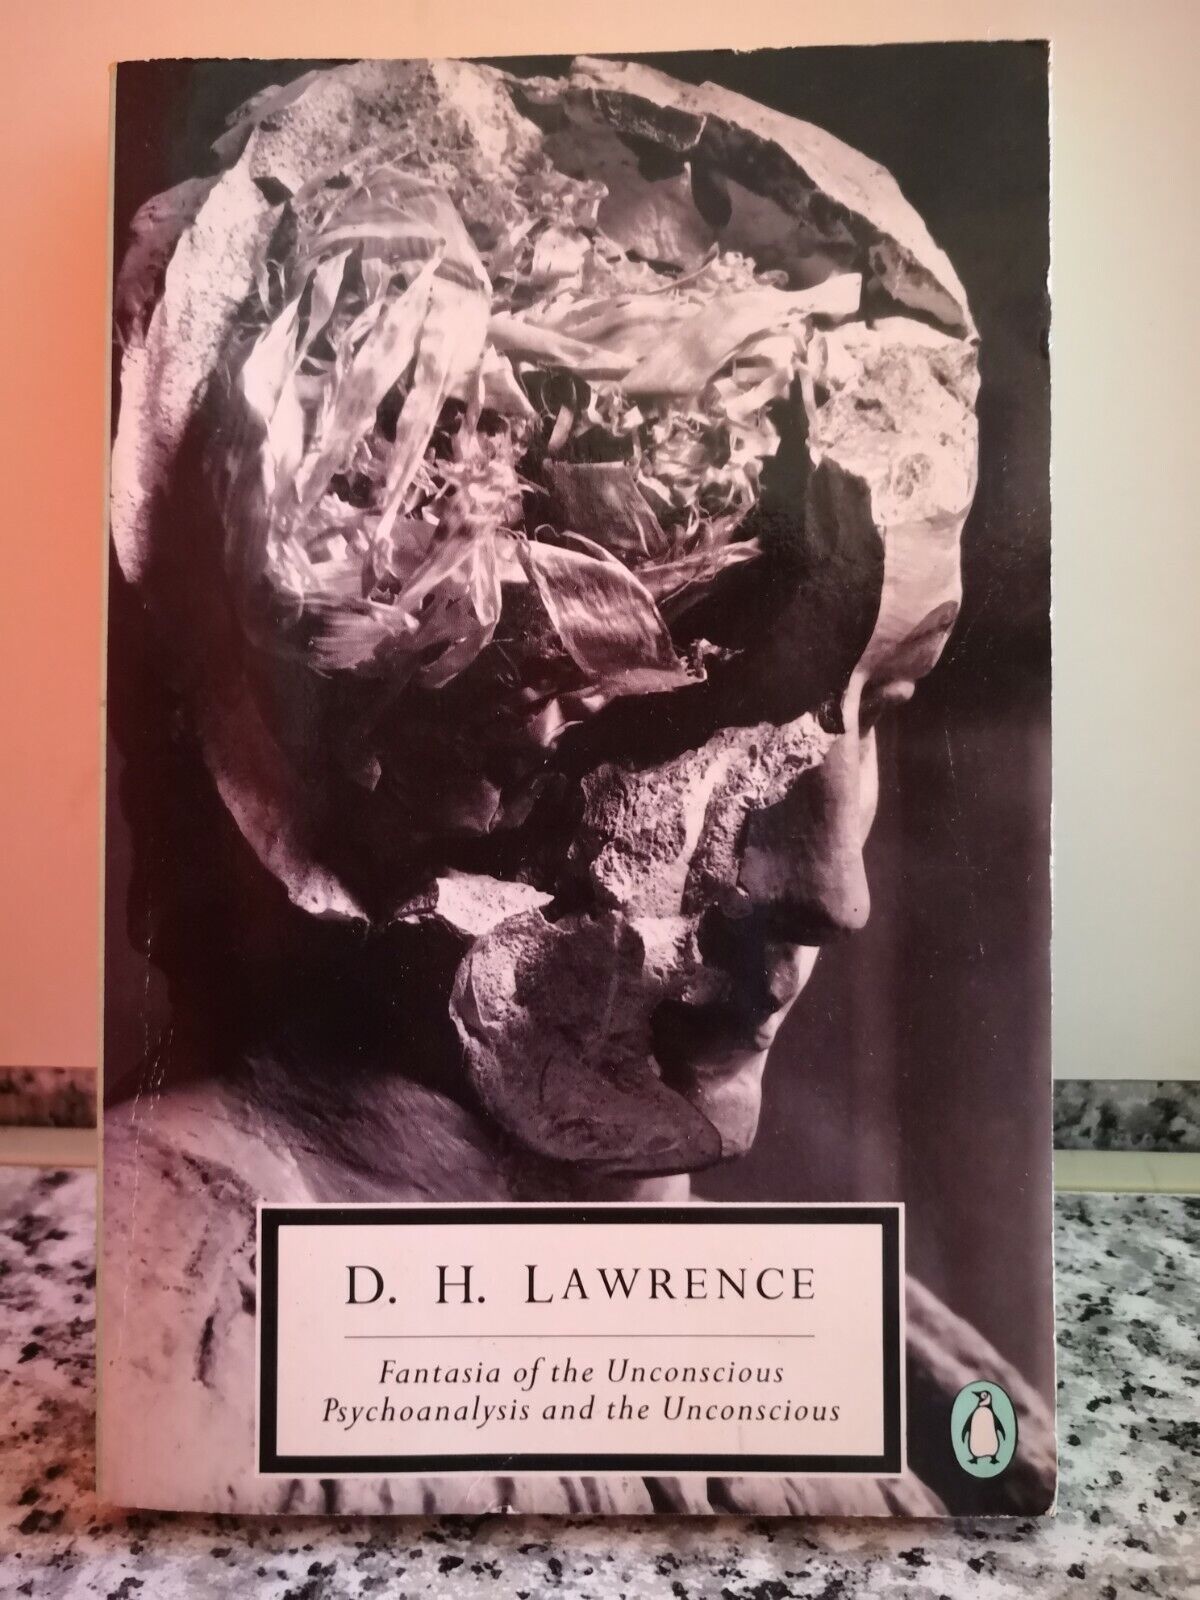   Fantasia of the unconscious  di Lawrence,  1960,  Penguin Books . F